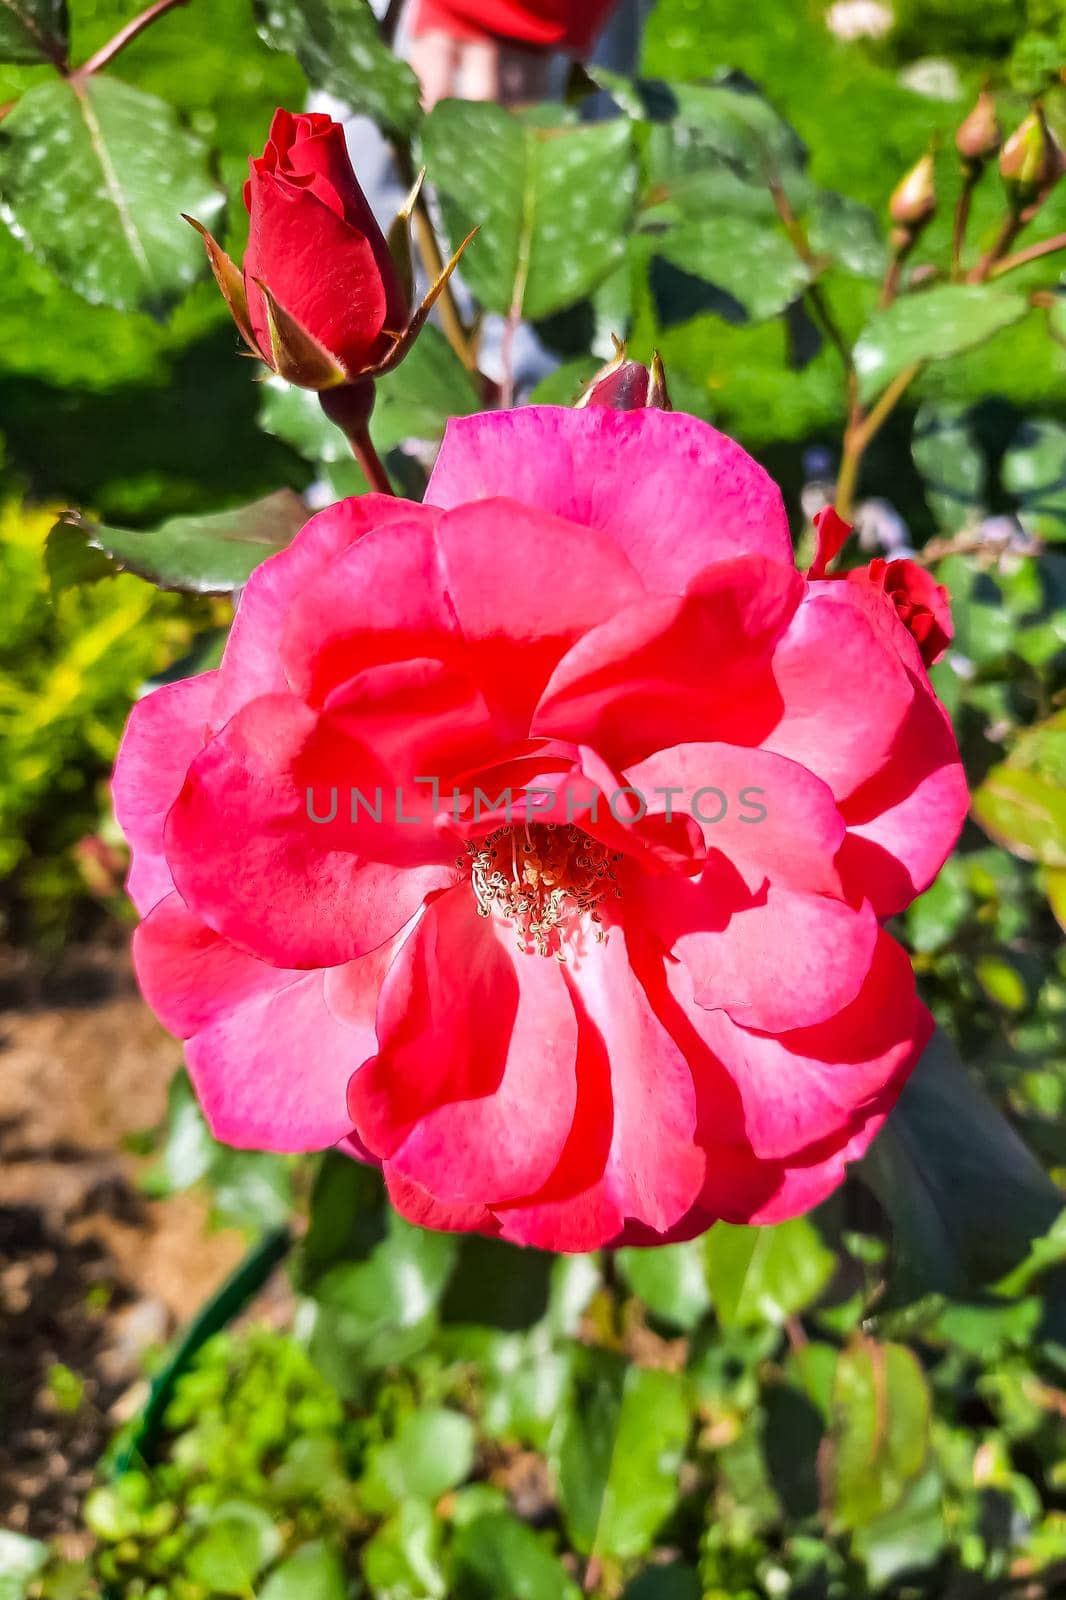 Blooming garden rose in spring. Selective focus. by kip02kas